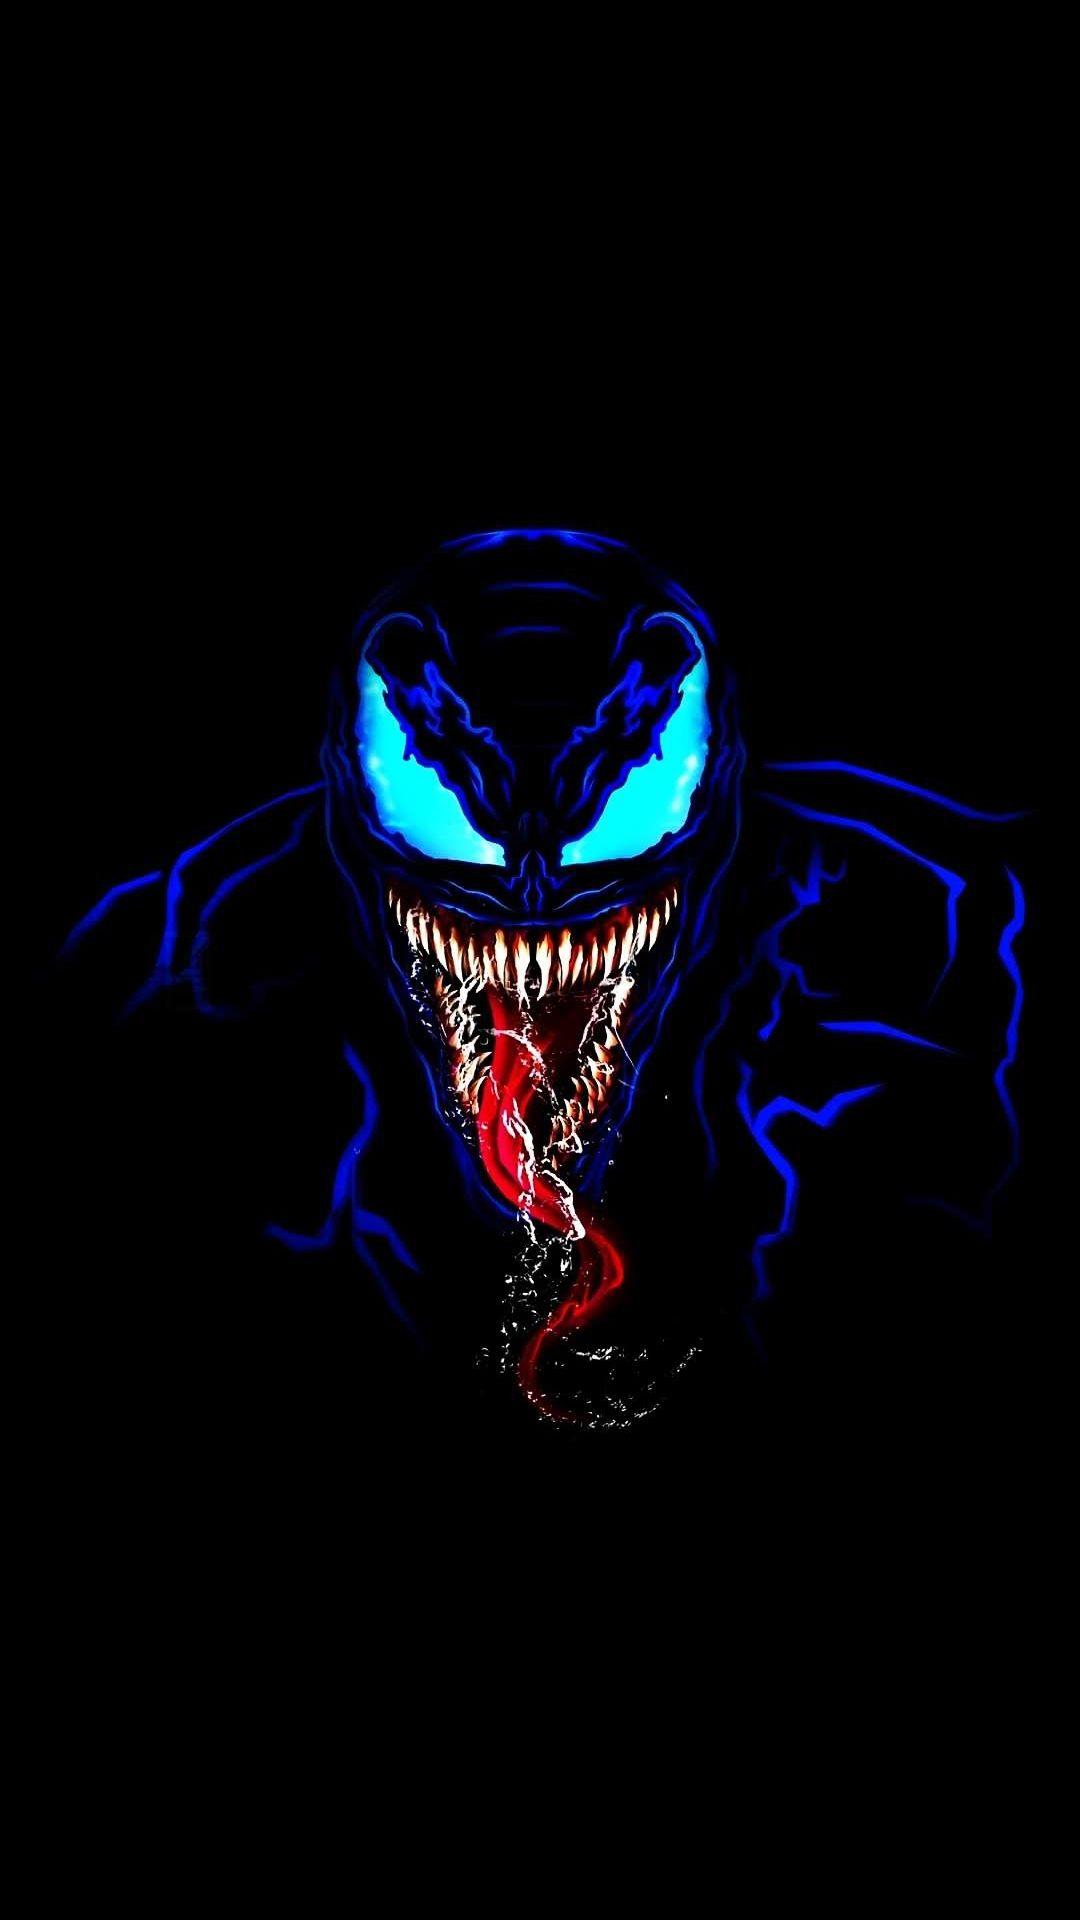 Venom in Dark iPhone Wallpaper. Wlp. Marvel wallpaper